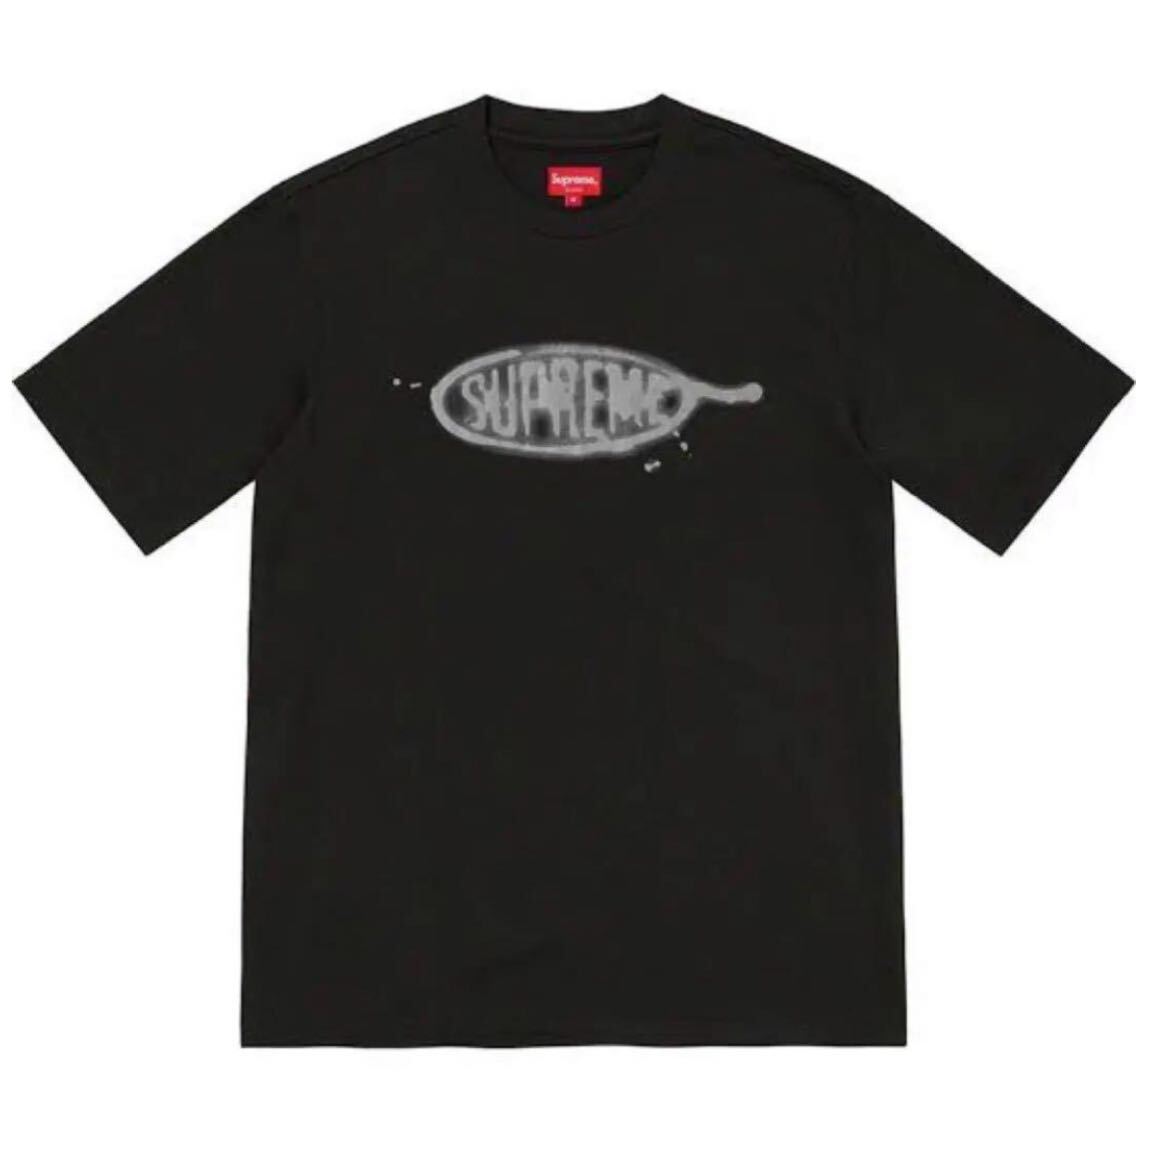 22SS Supreme Ink Blot S/S Top BLACK M Tシャツ Tee シュプリーム